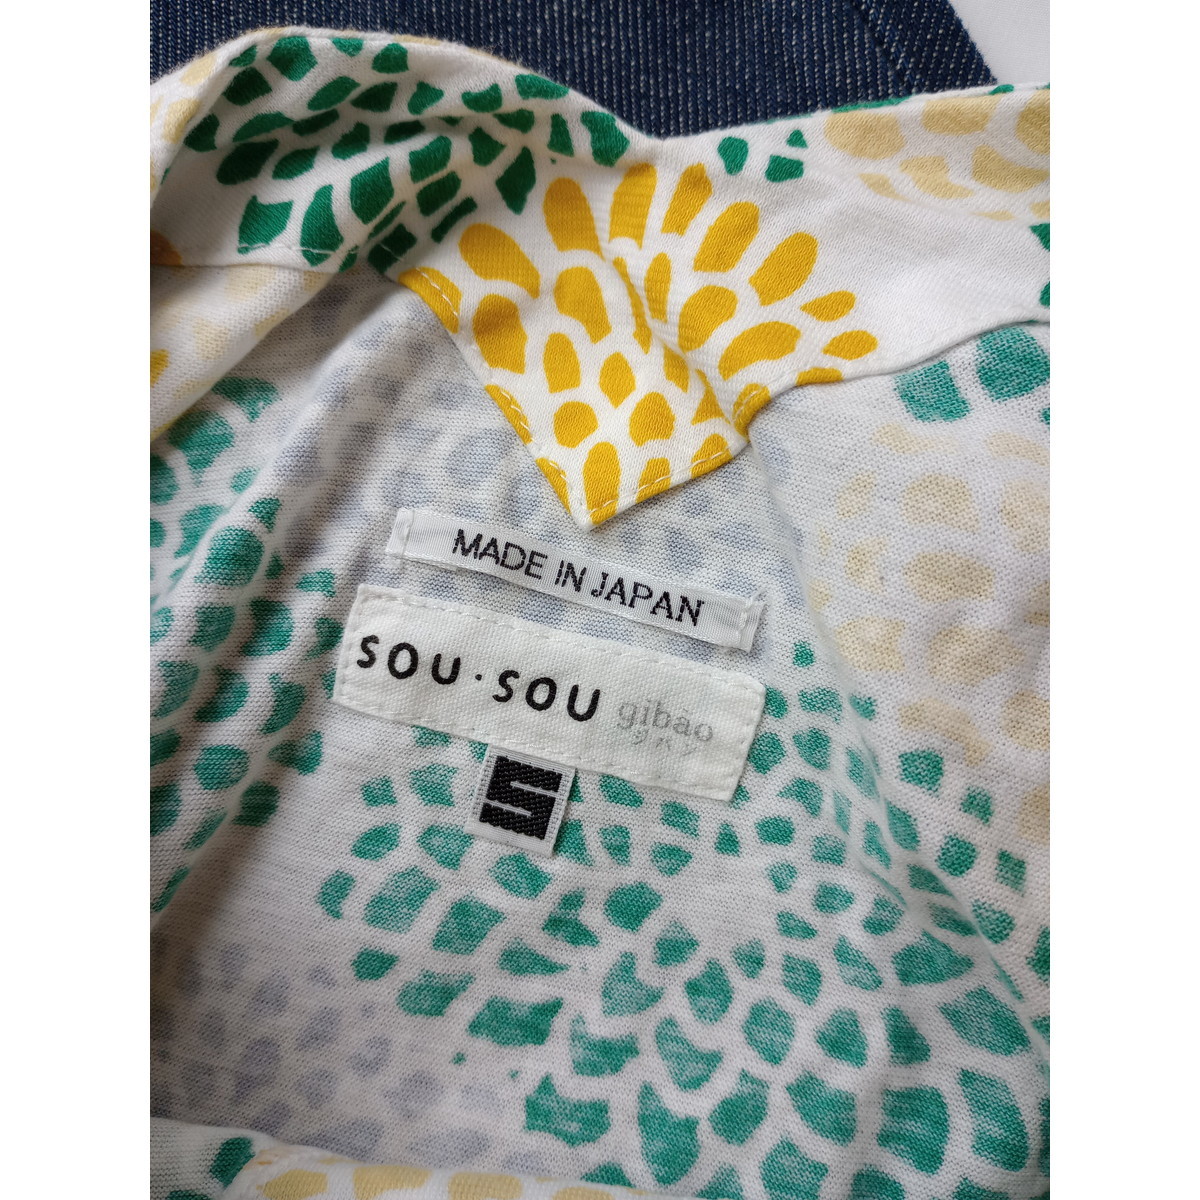 SOUSOU ソウソウ gibao ジバン「着るだけで素敵に華やぐ」コットン 綿 100％ フラワー 花柄 菊柄 Vネック カットソー 日本製 S (72S+5177)_画像4